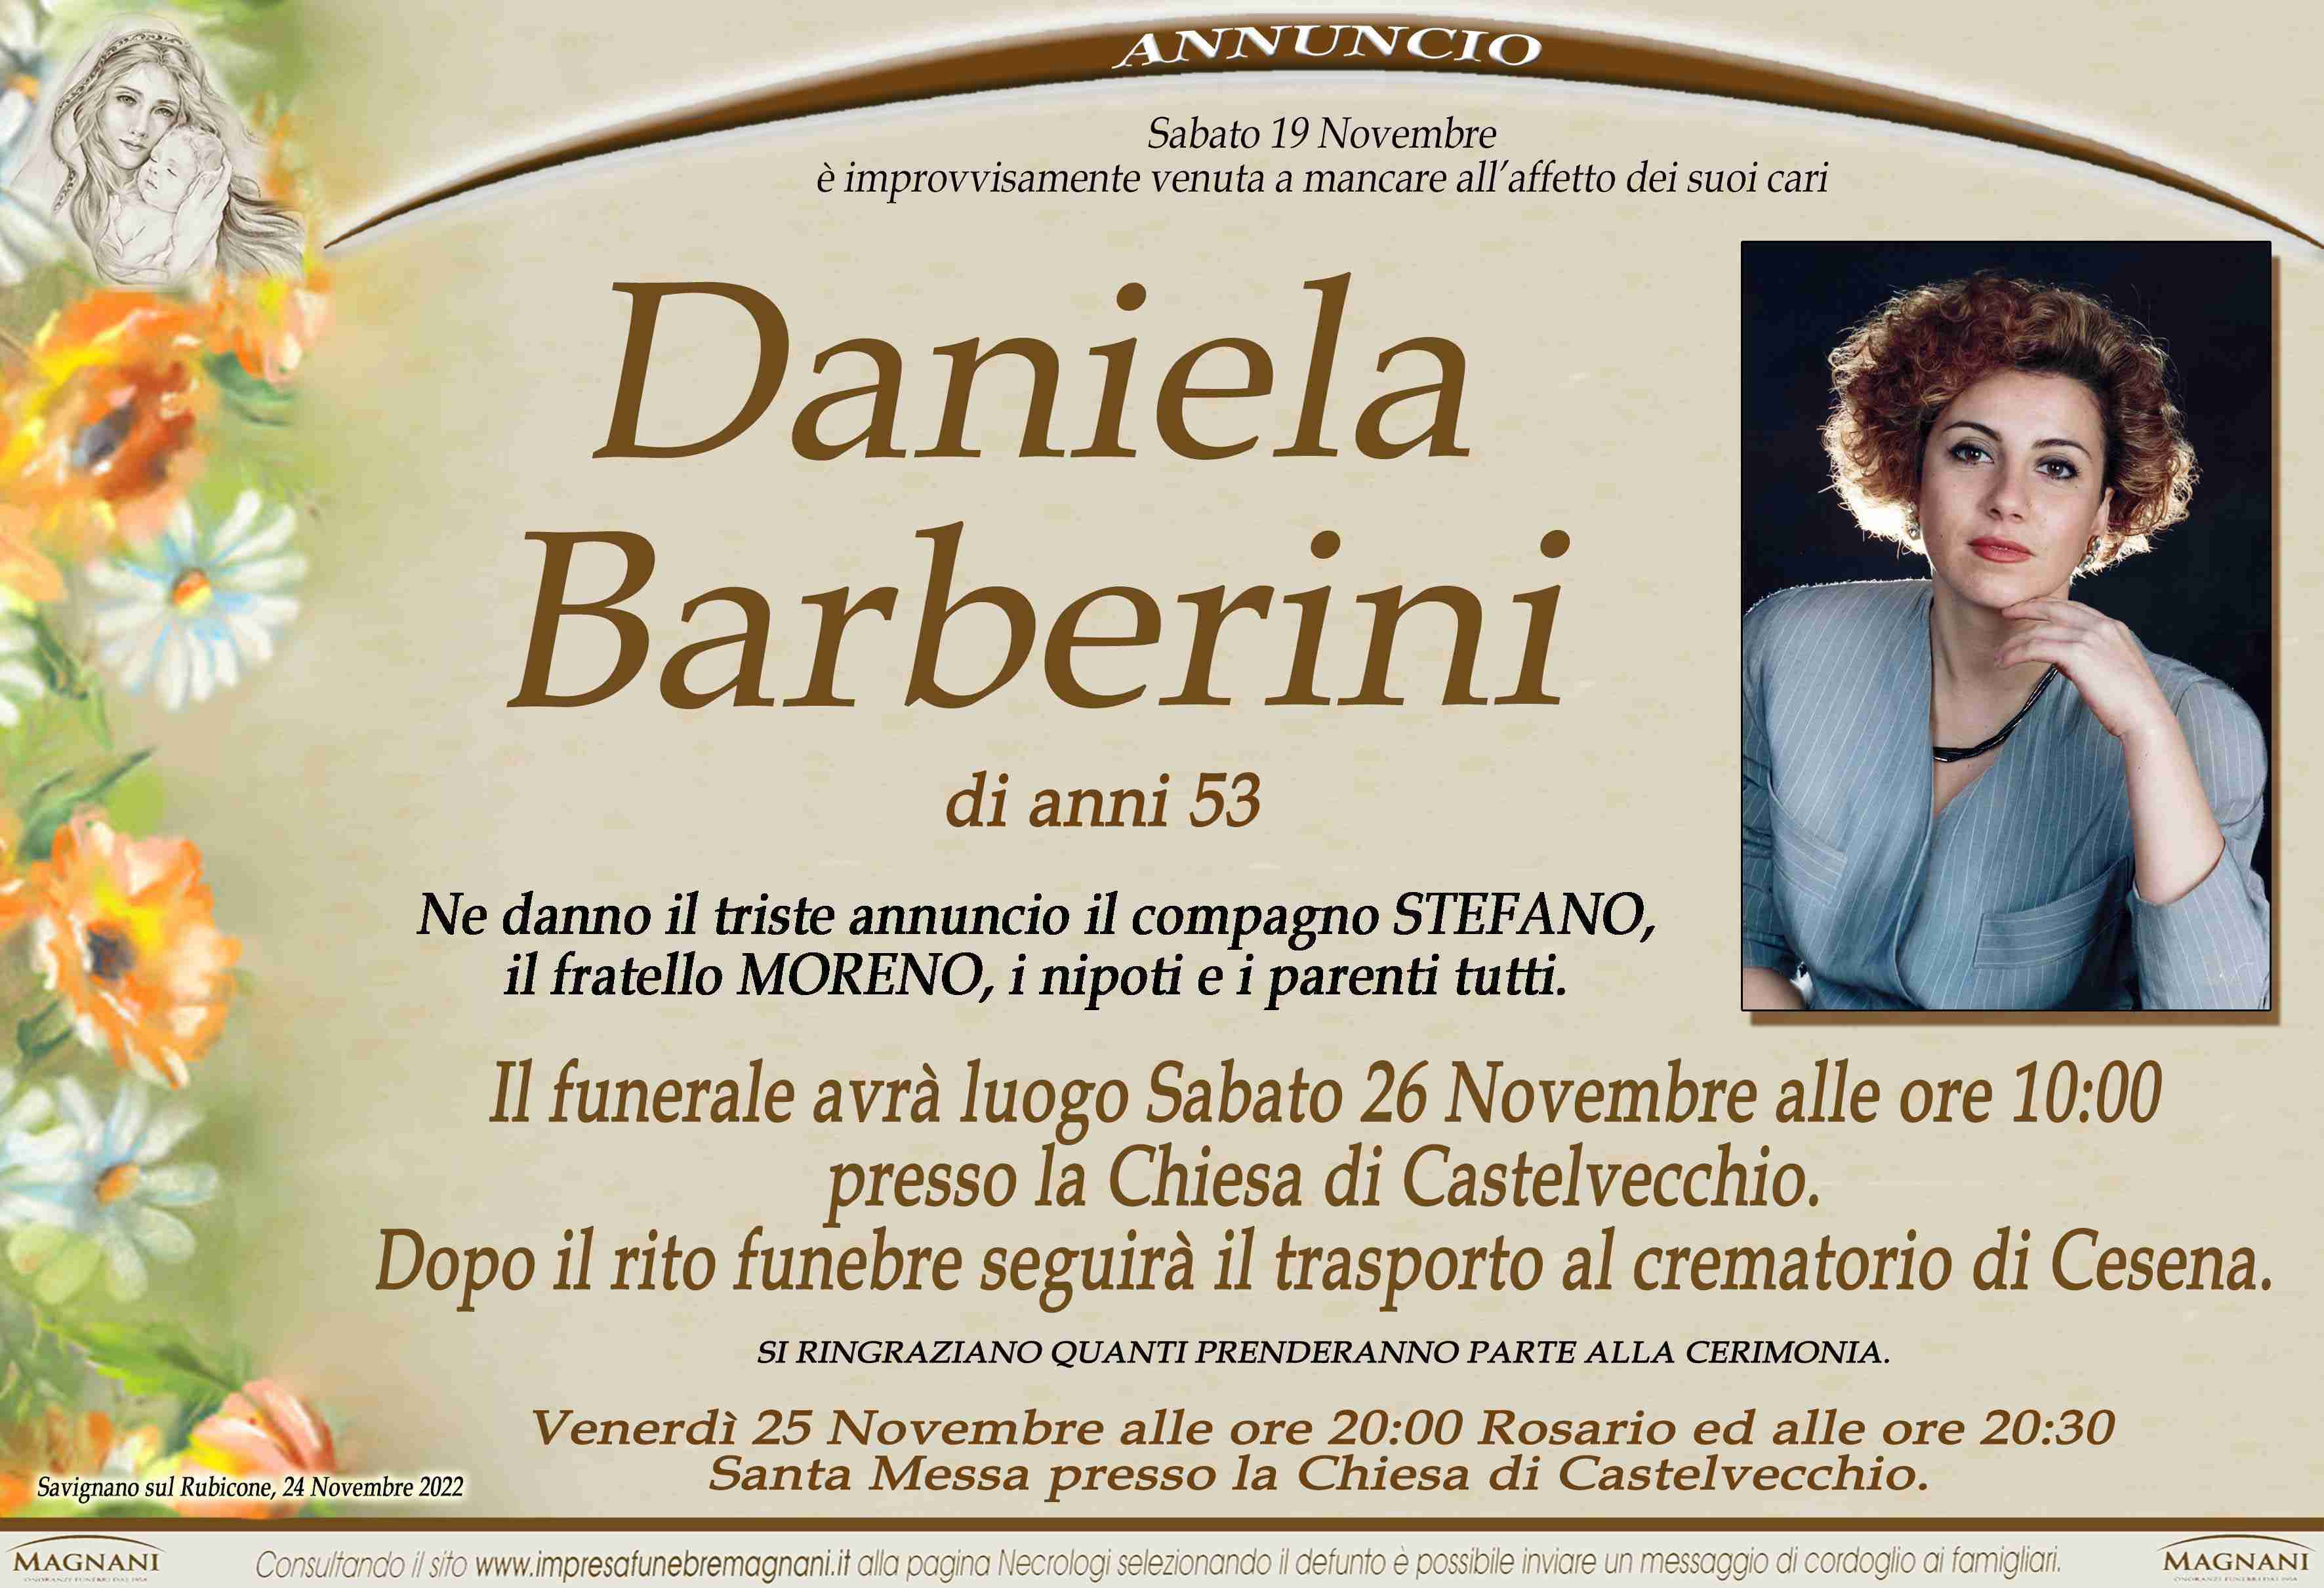 Barberini Daniela